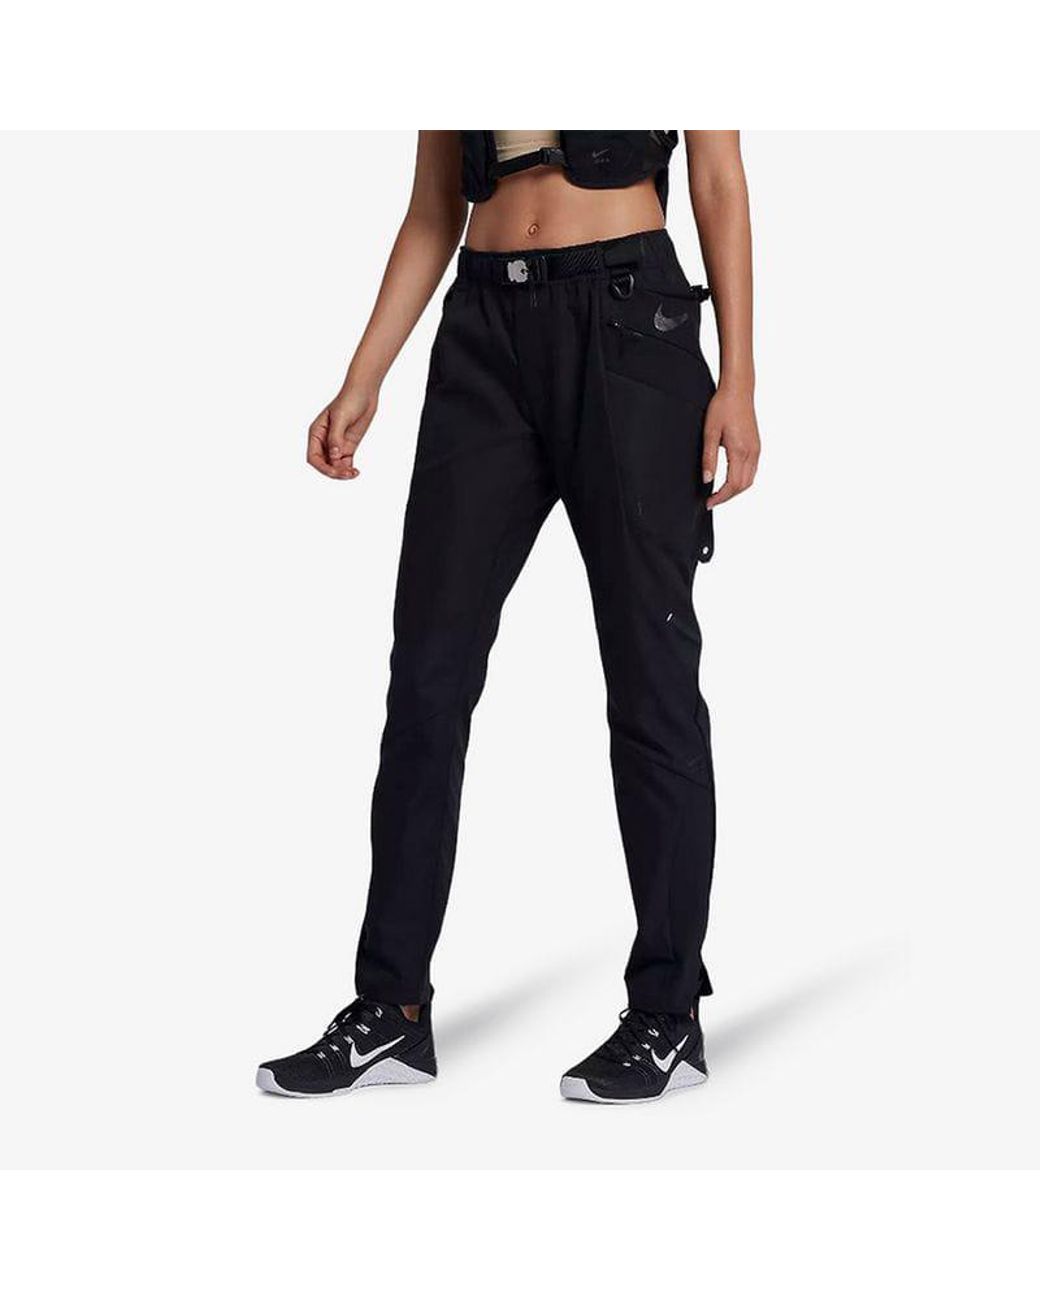 Nike X Mmw Stretch Woven Trousers in Black | Lyst